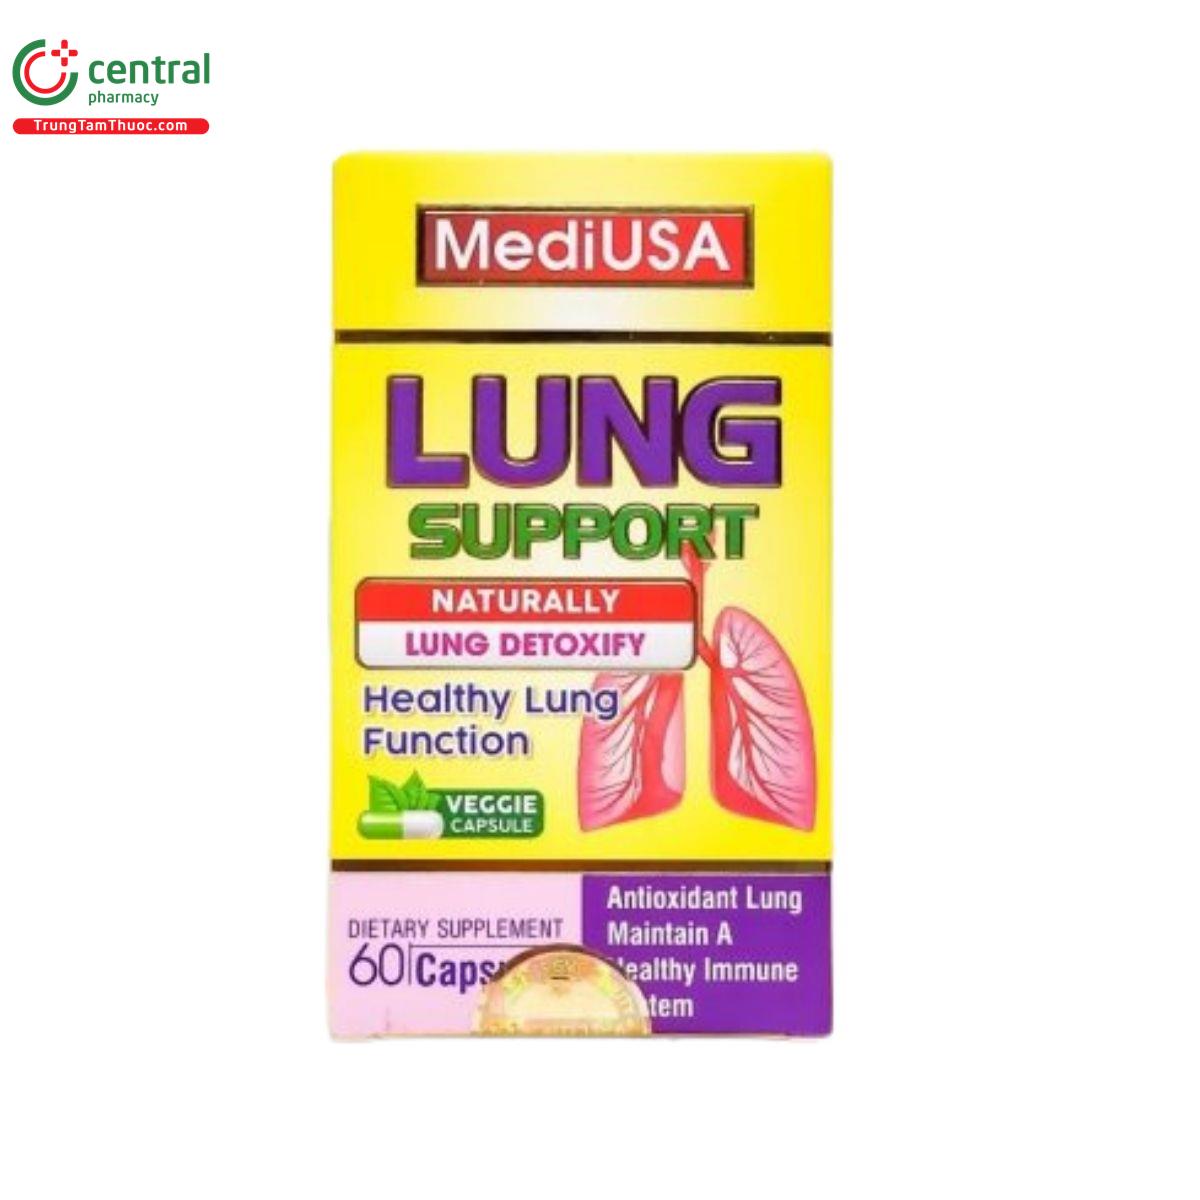 lung support mediusa 2 L4287